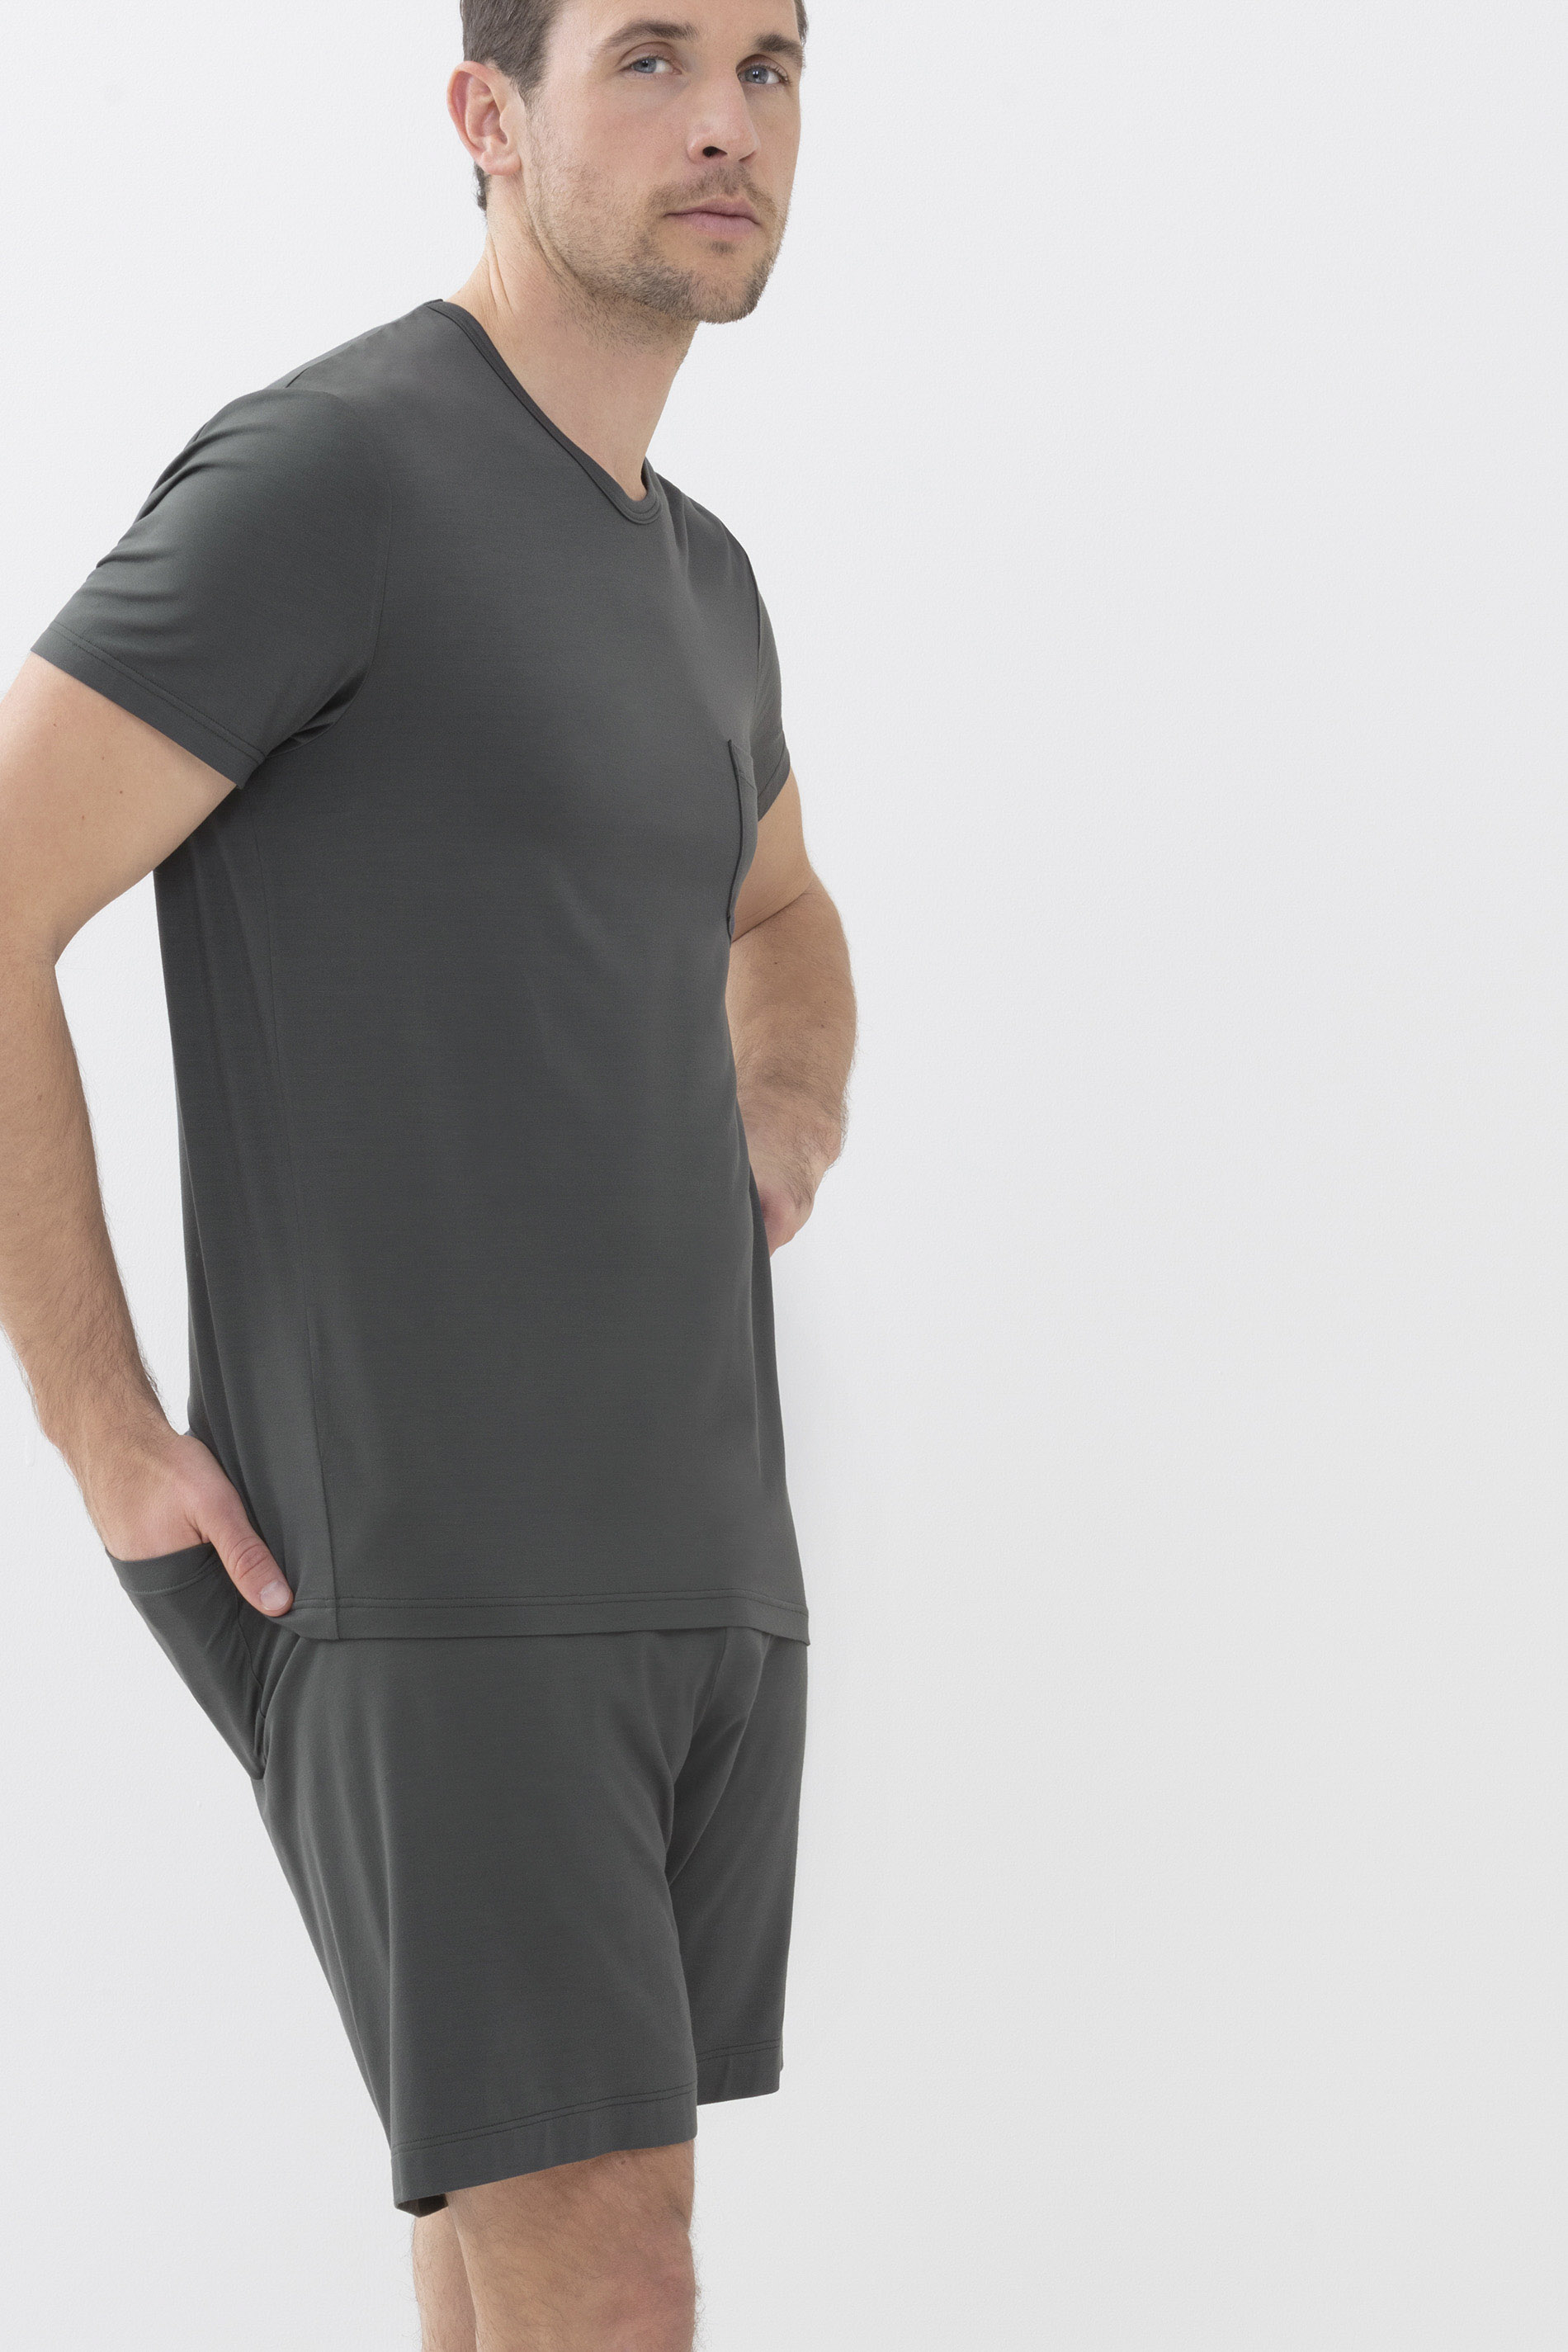 Shirt 1/2 sleeve Stormy Grey Serie Jefferson Modal Detail View 02 | mey®